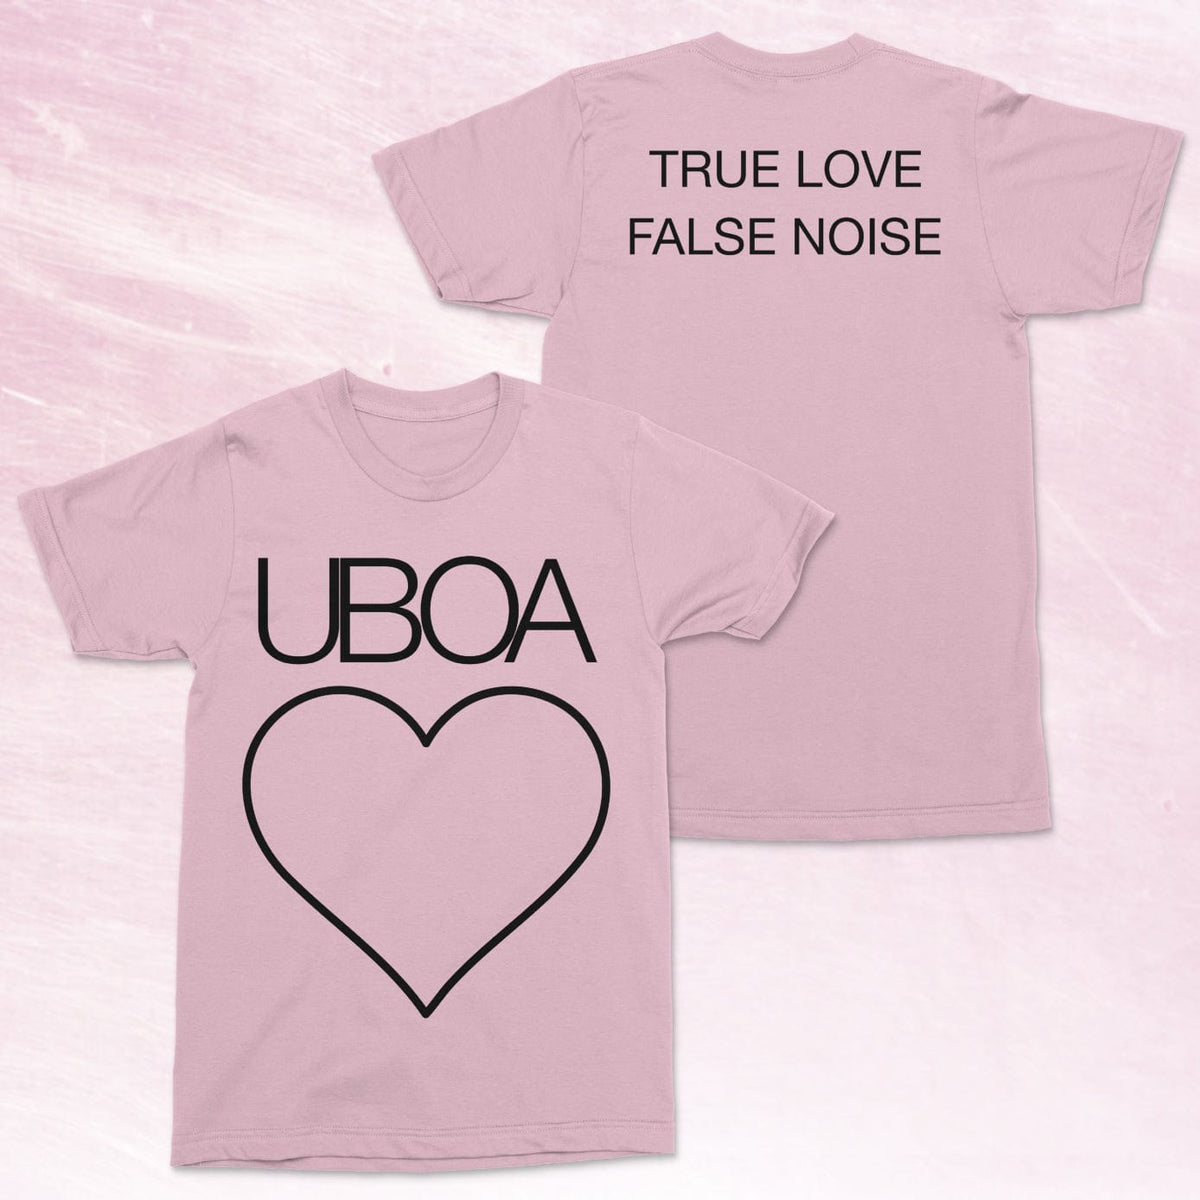 The Flenser Apparel Uboa &quot;True Love, False Noise&quot; Shirt